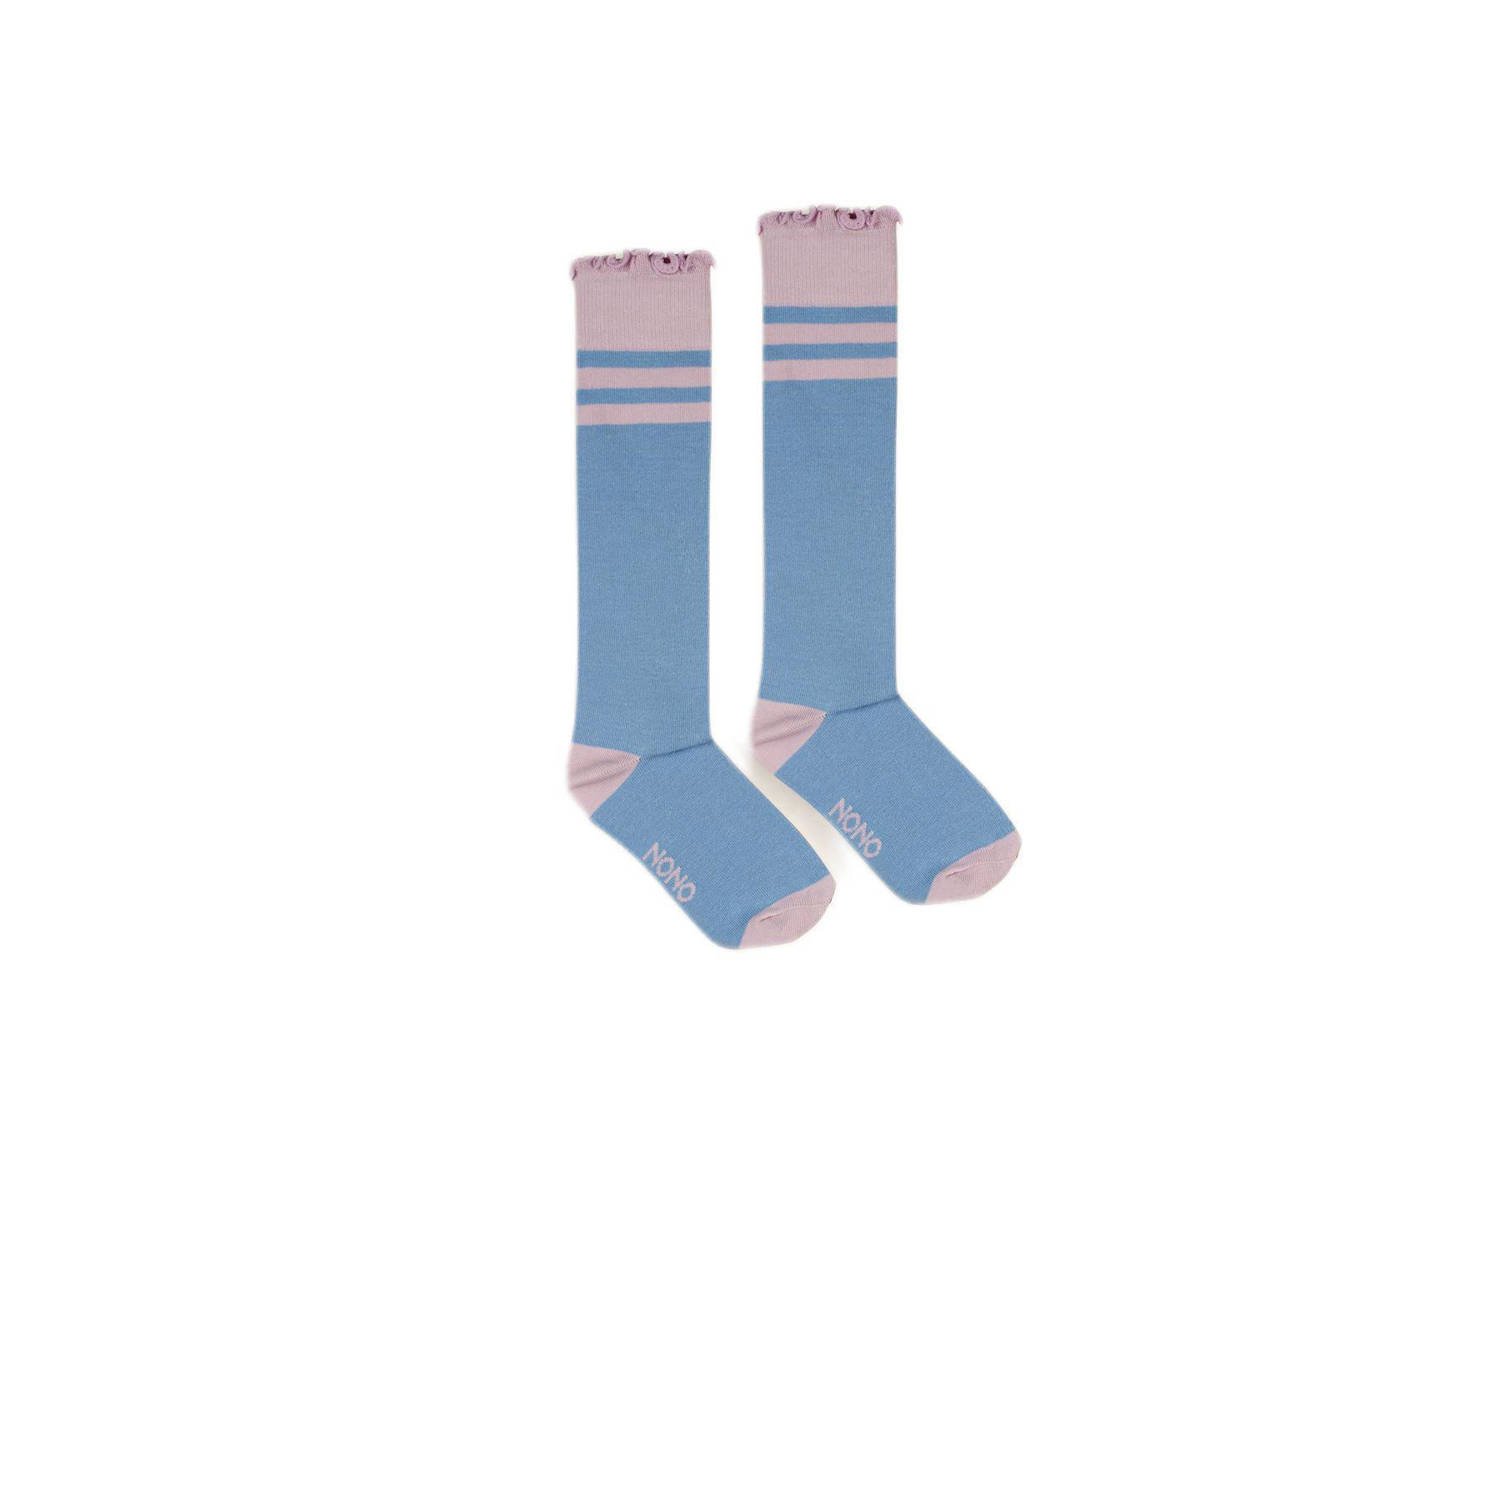 NONO sokken zachtblauw roze